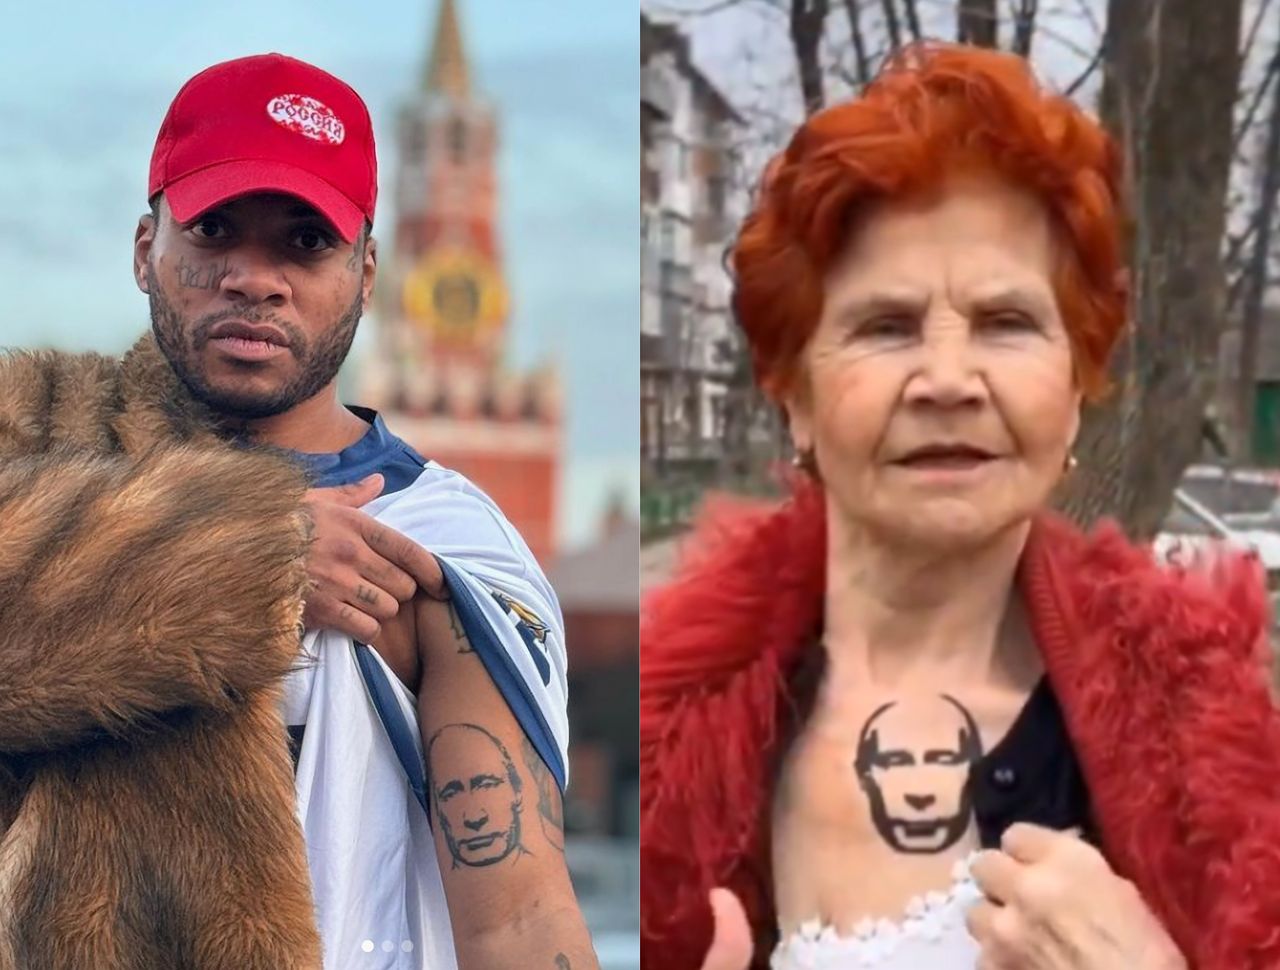 Russian rapper's Putin tattoo sparks trend amid sham elections